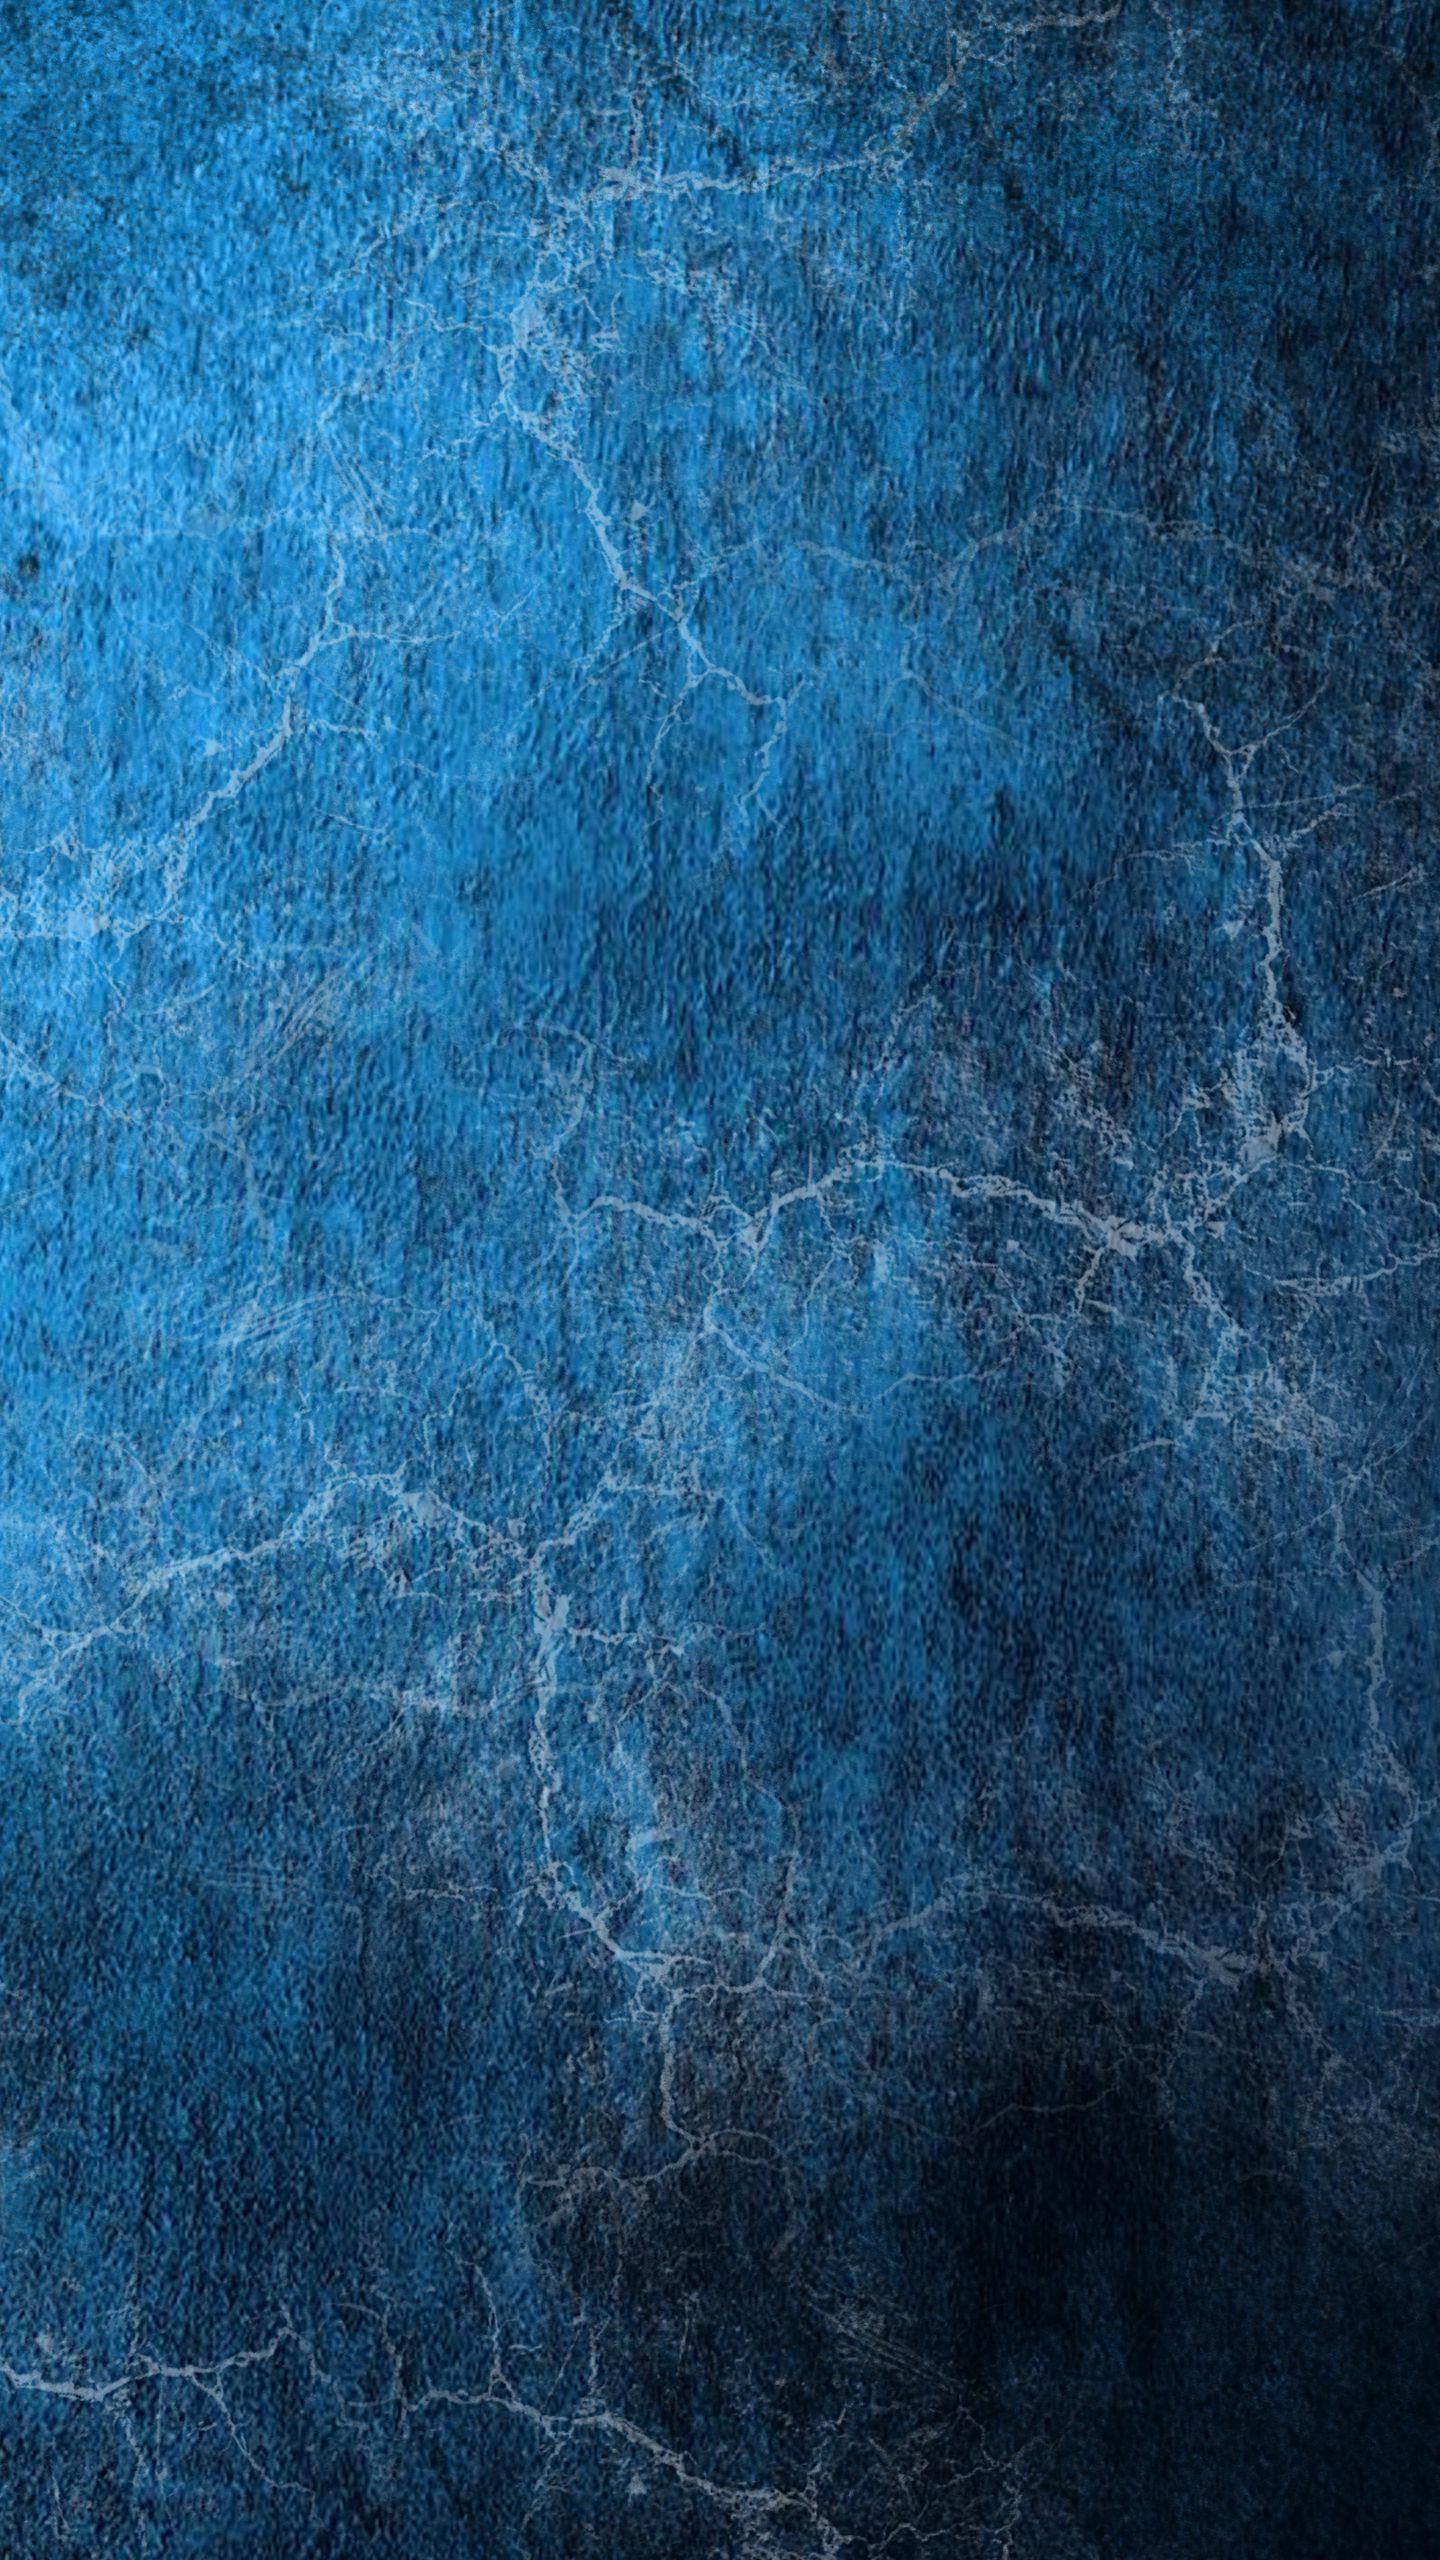 Download wallpaper 1440x2560 grunge, vintage, texture, blue qhd samsung  galaxy s6, s7, edge, note, lg g4 hd background